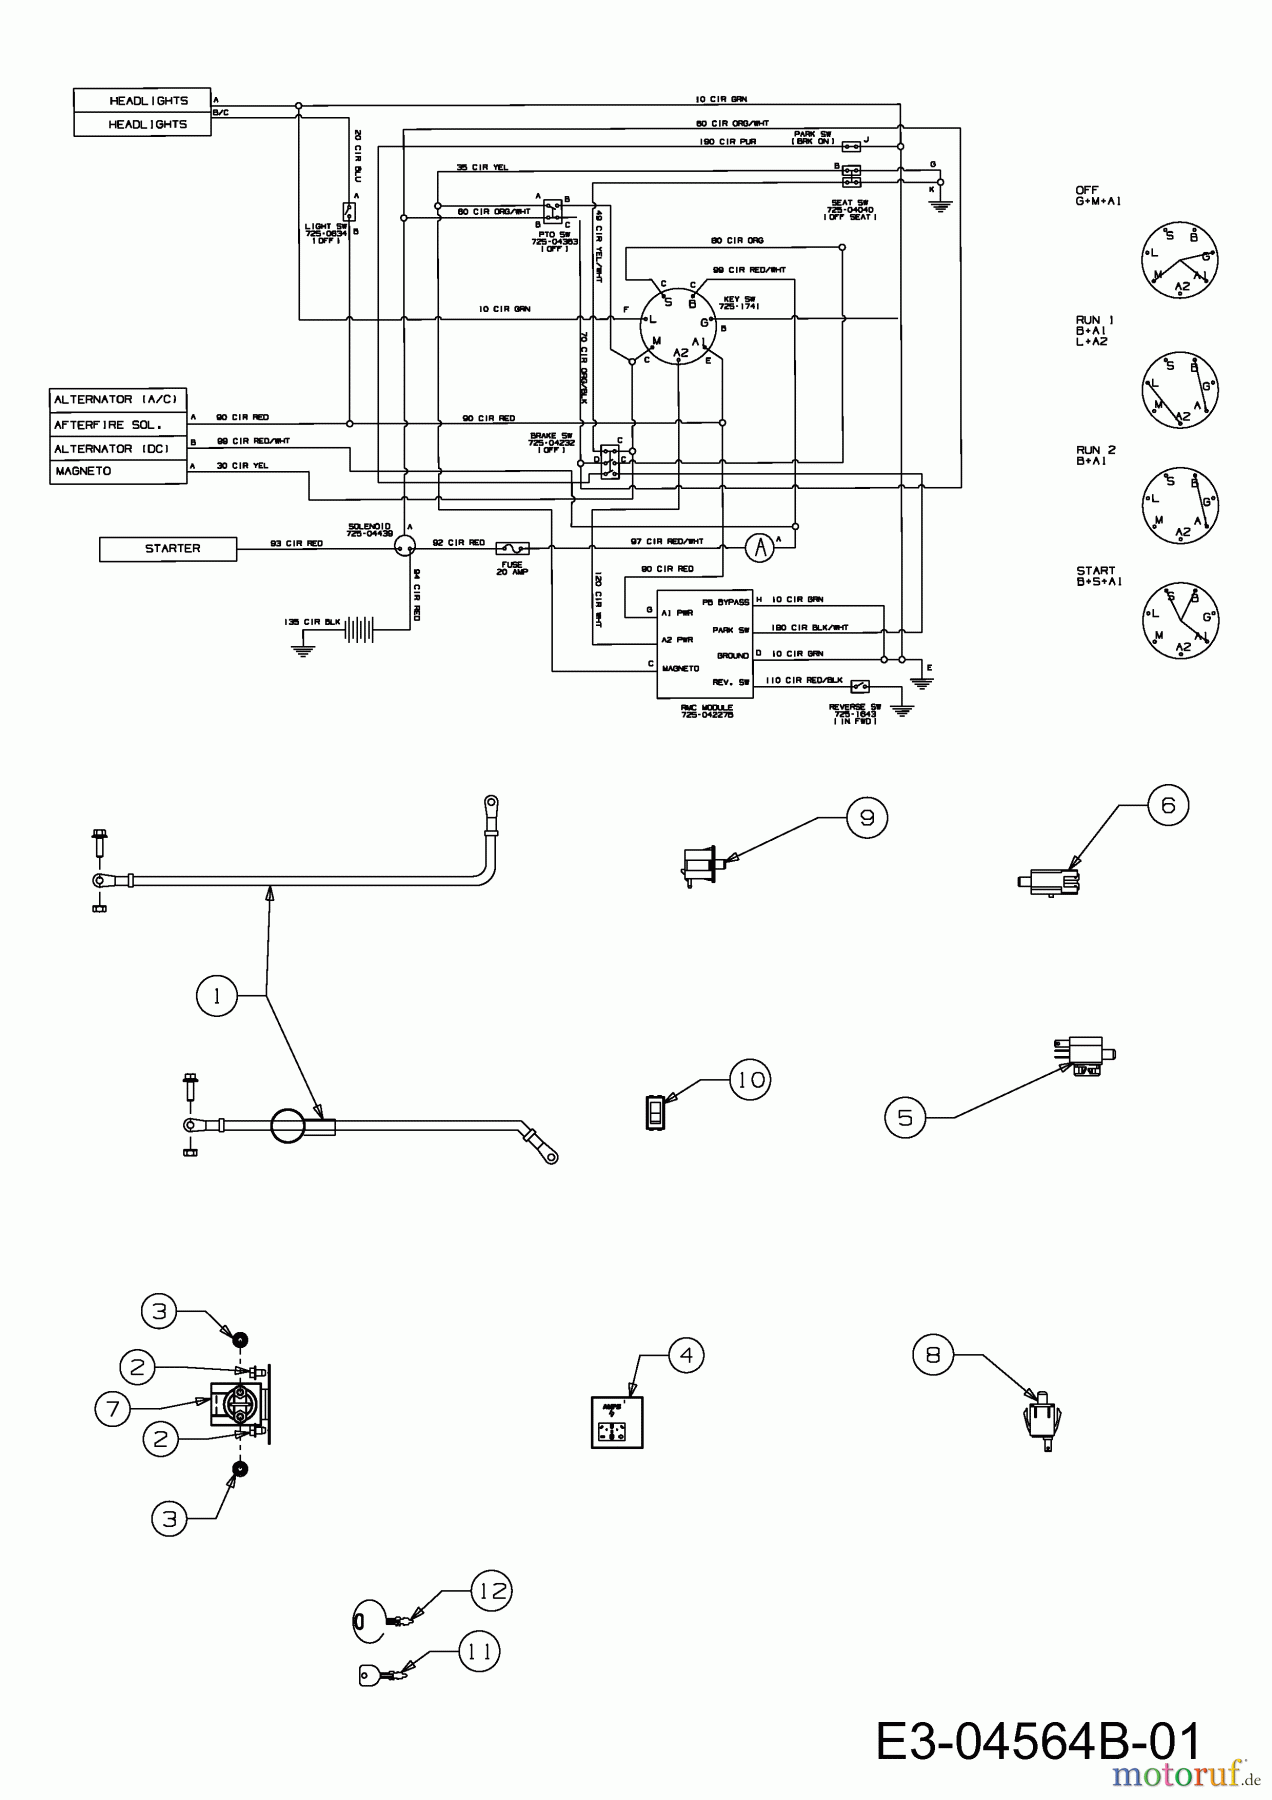  Gutbrod Lawn tractors ELX 107 SHL-K 13BG91GG690  (2010) Electric parts, Wiring diagram